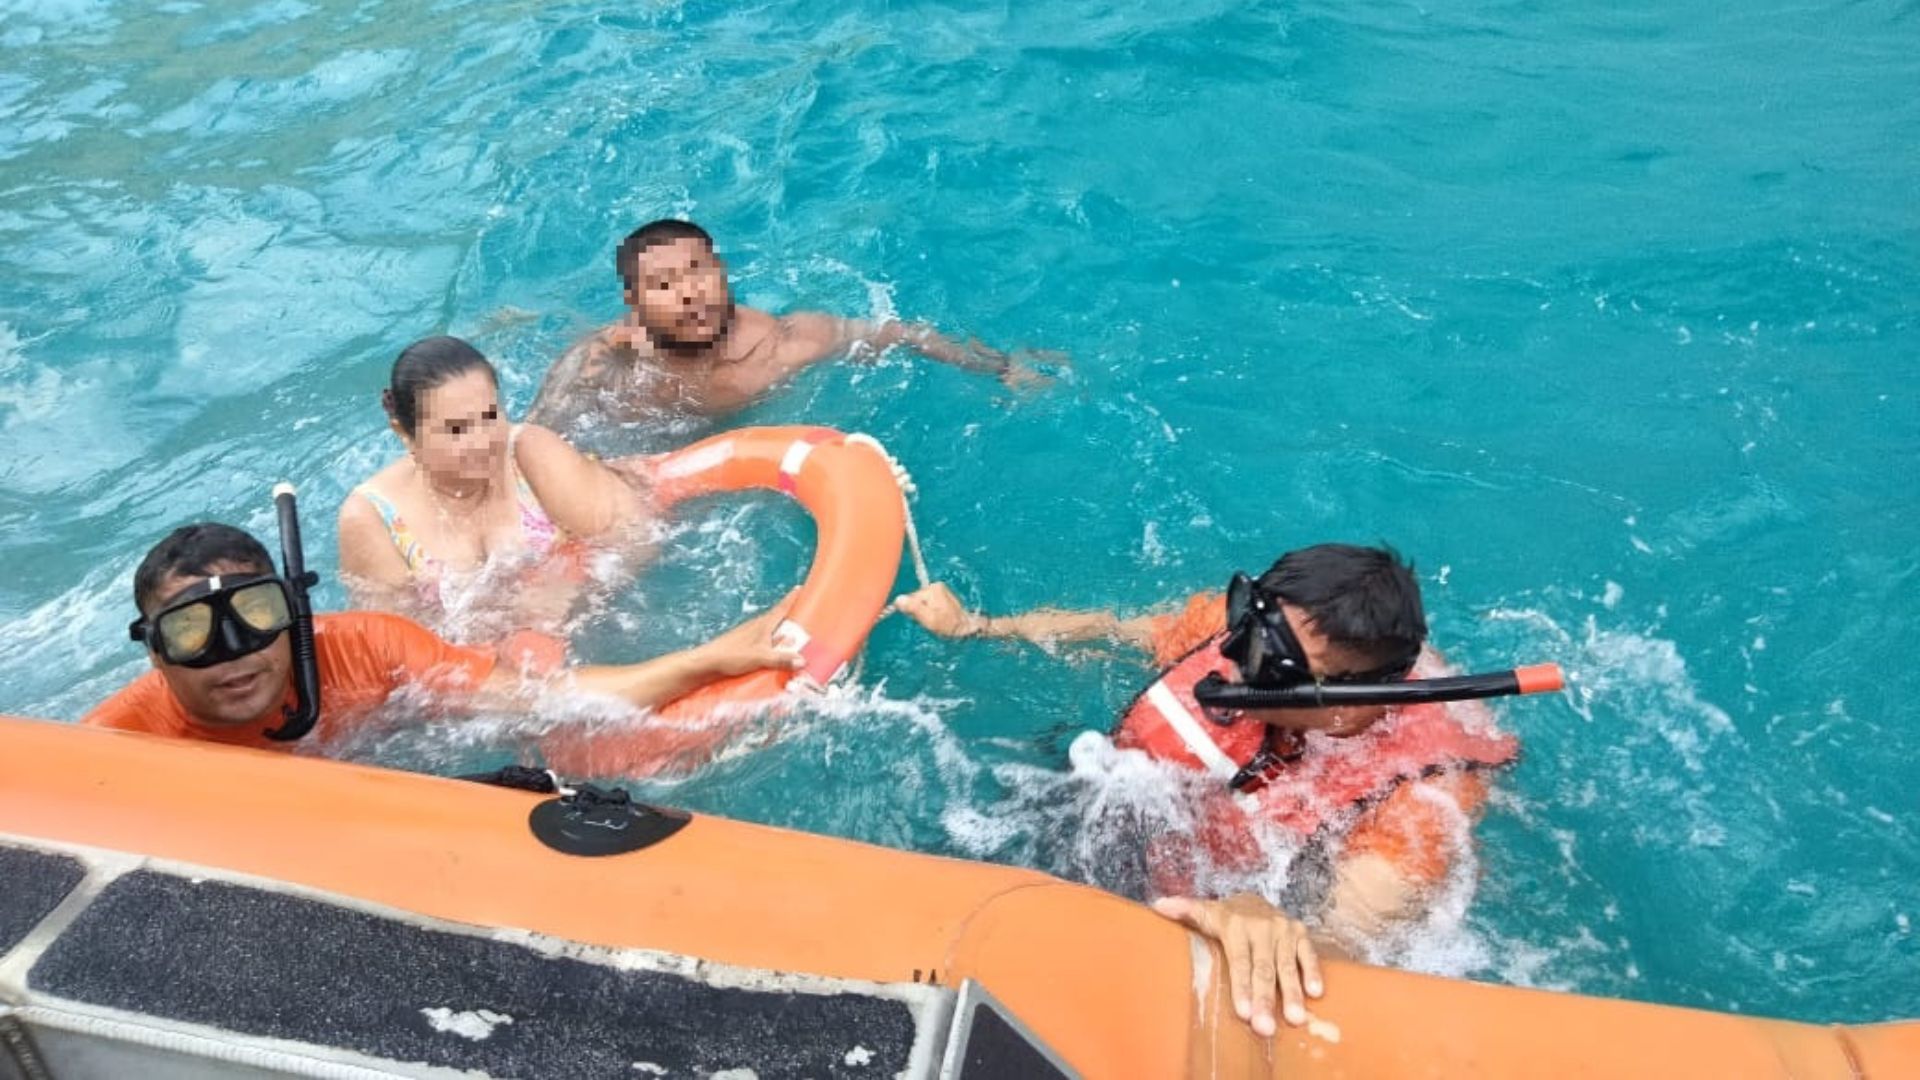 Turistas flotando con salvavidas de rescate tras hundirse embarcación en Cabo San Lucas.